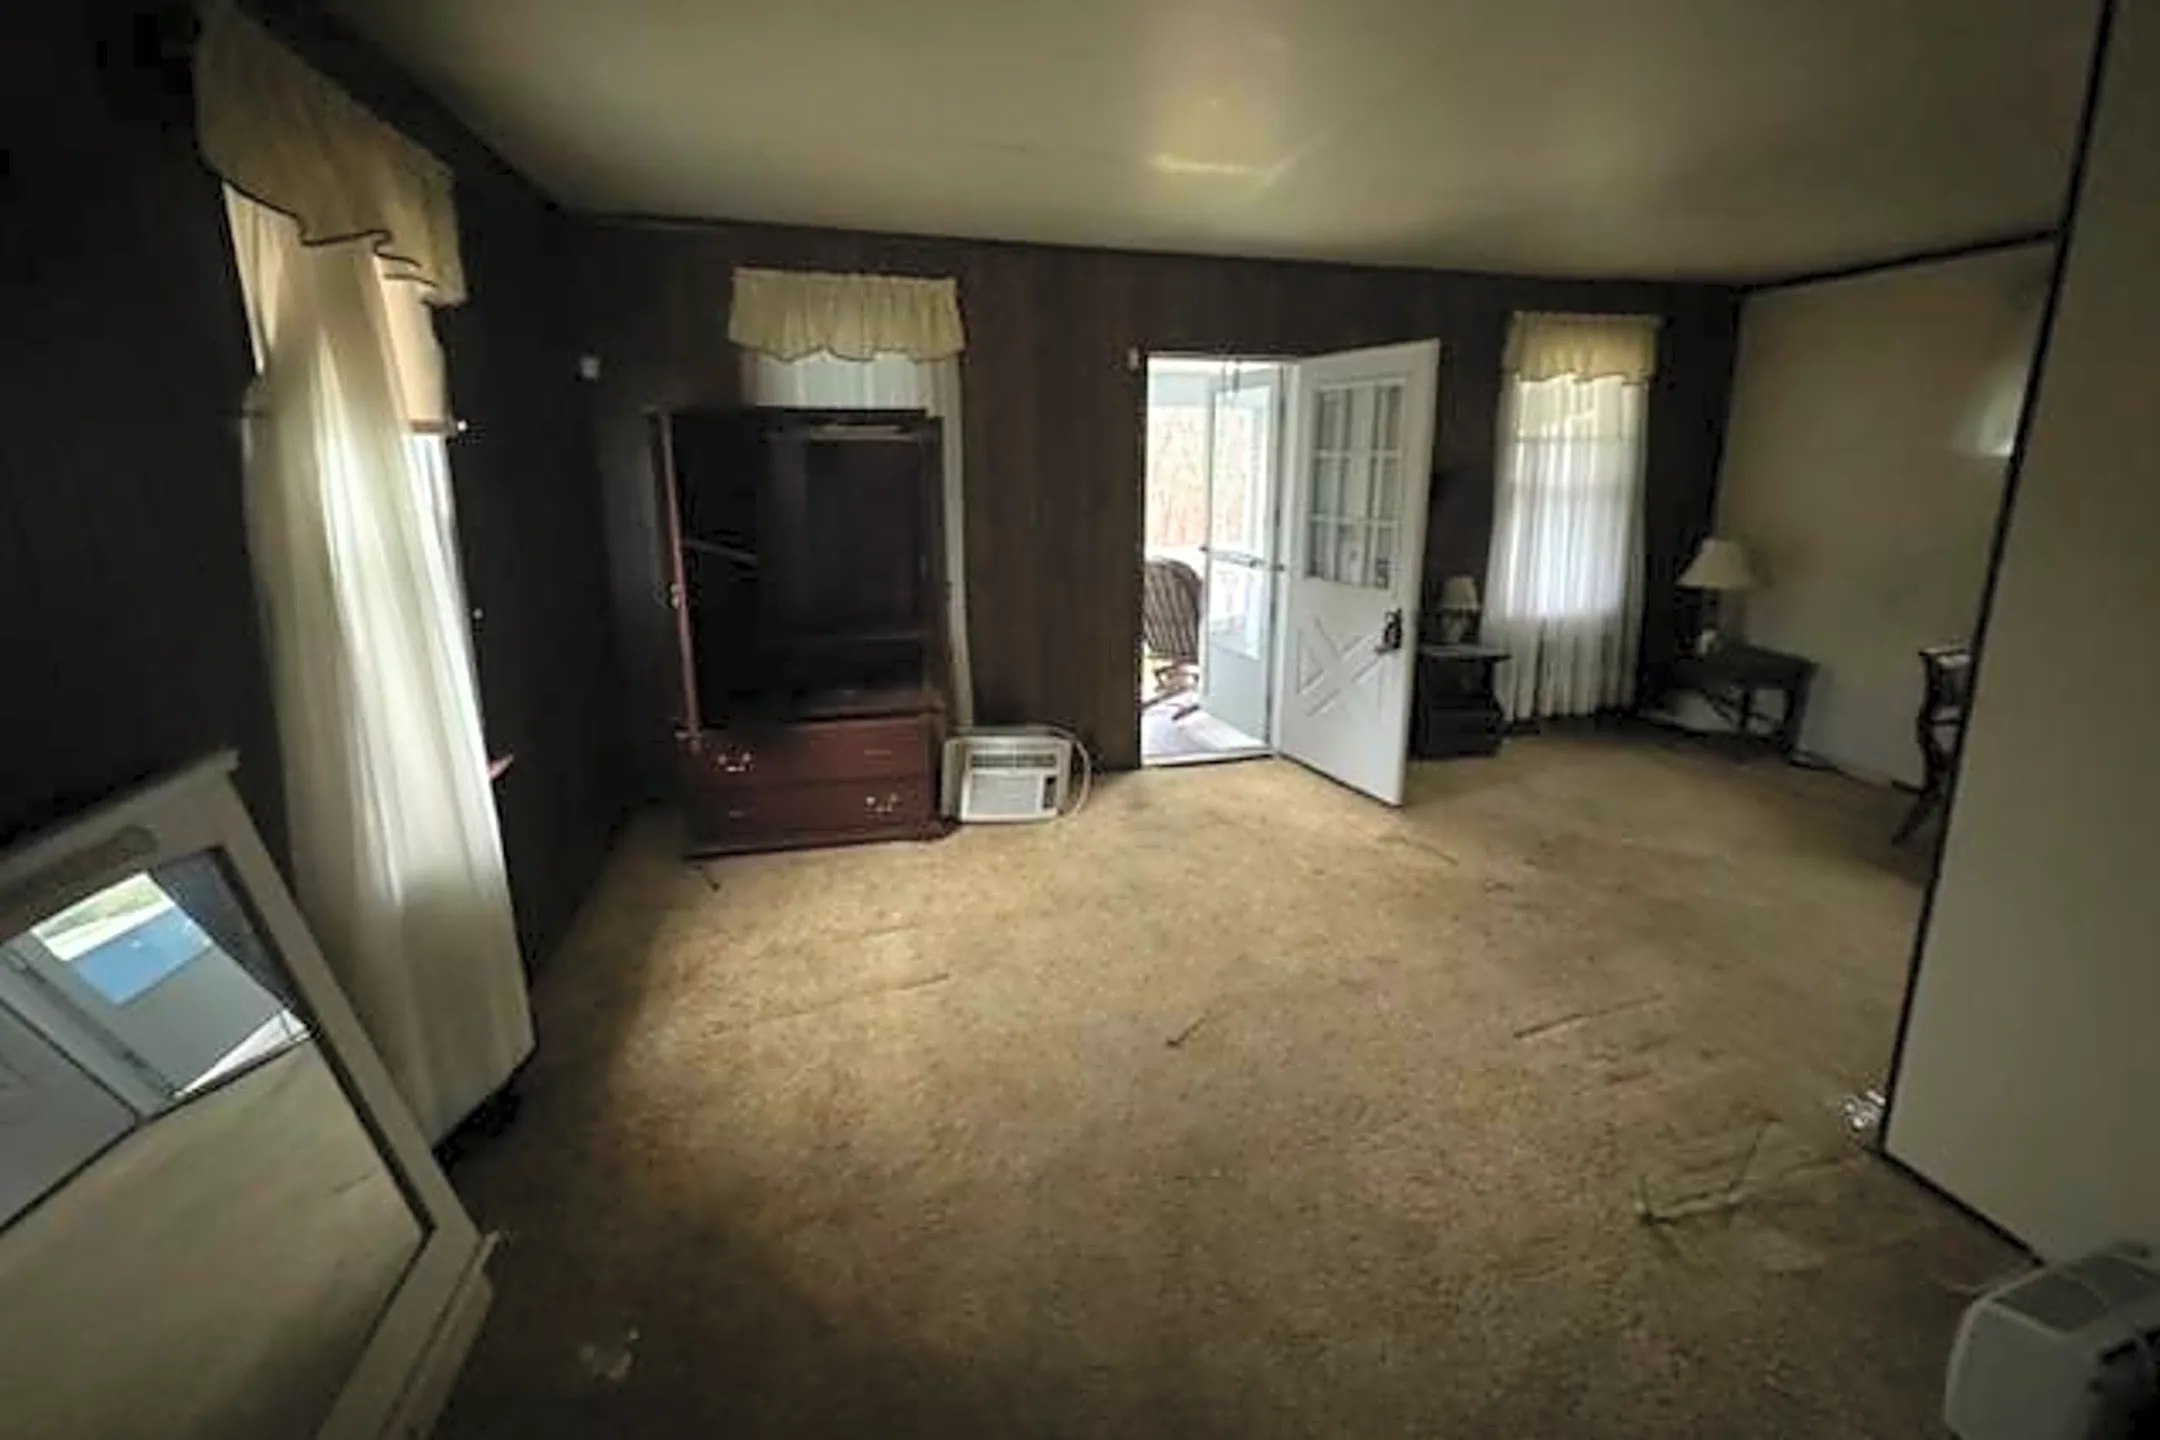 Living Room - 1303 Davidson Way - Aliquippa, PA